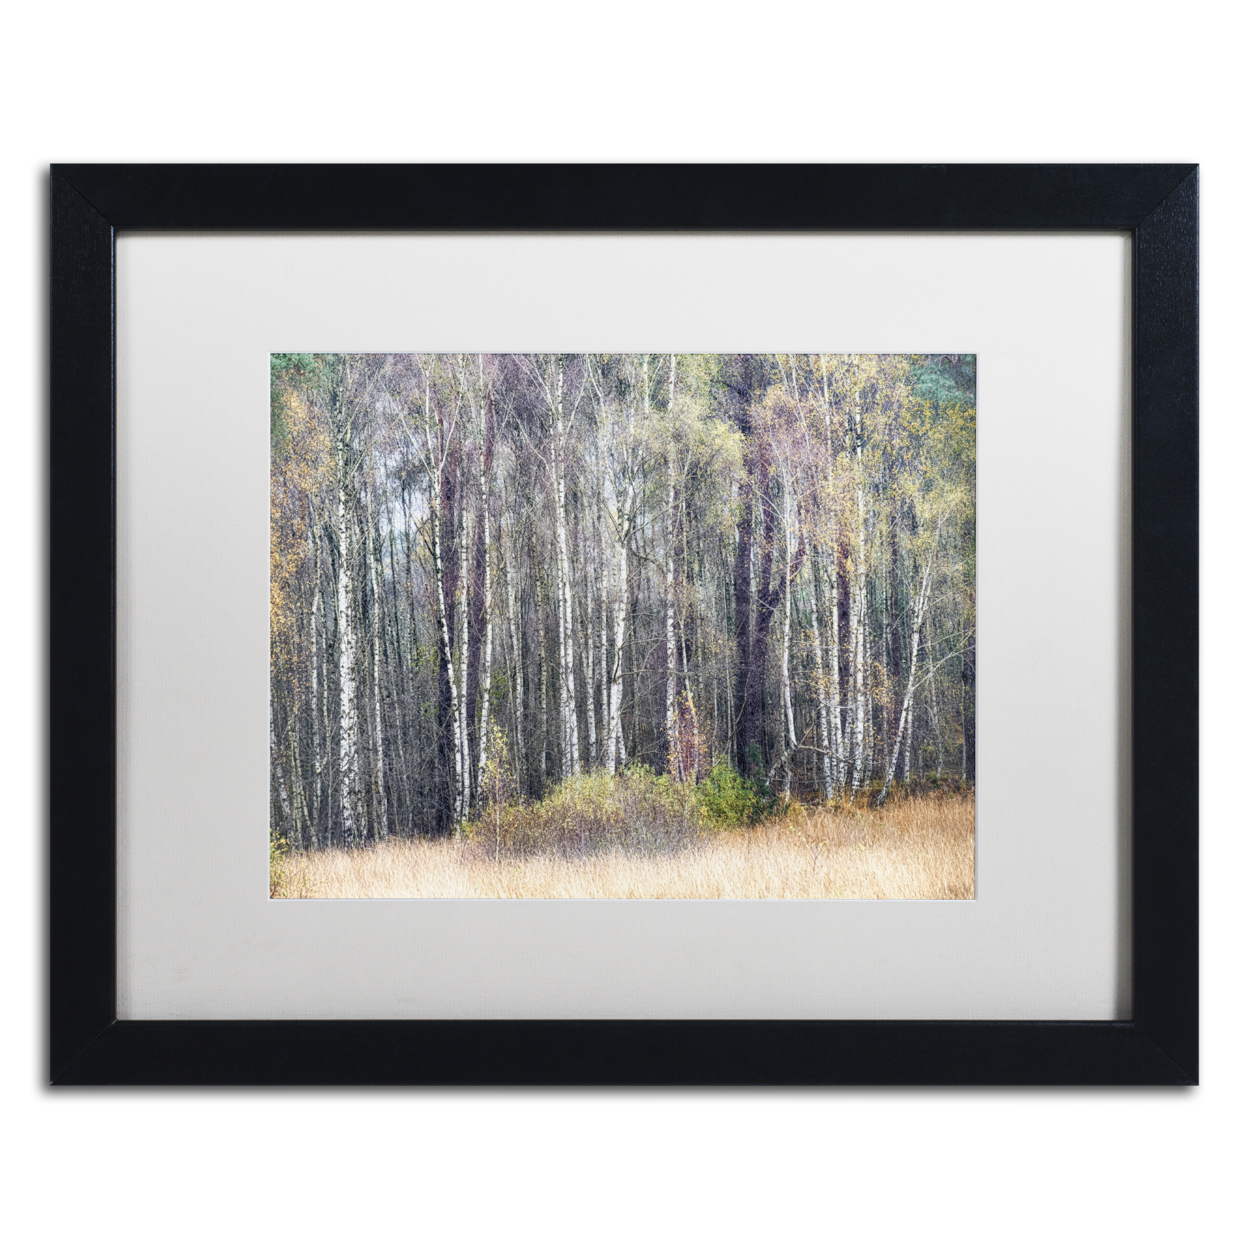 Cora Niele 'Birches' Black Wooden Framed Art 18 X 22 Inches